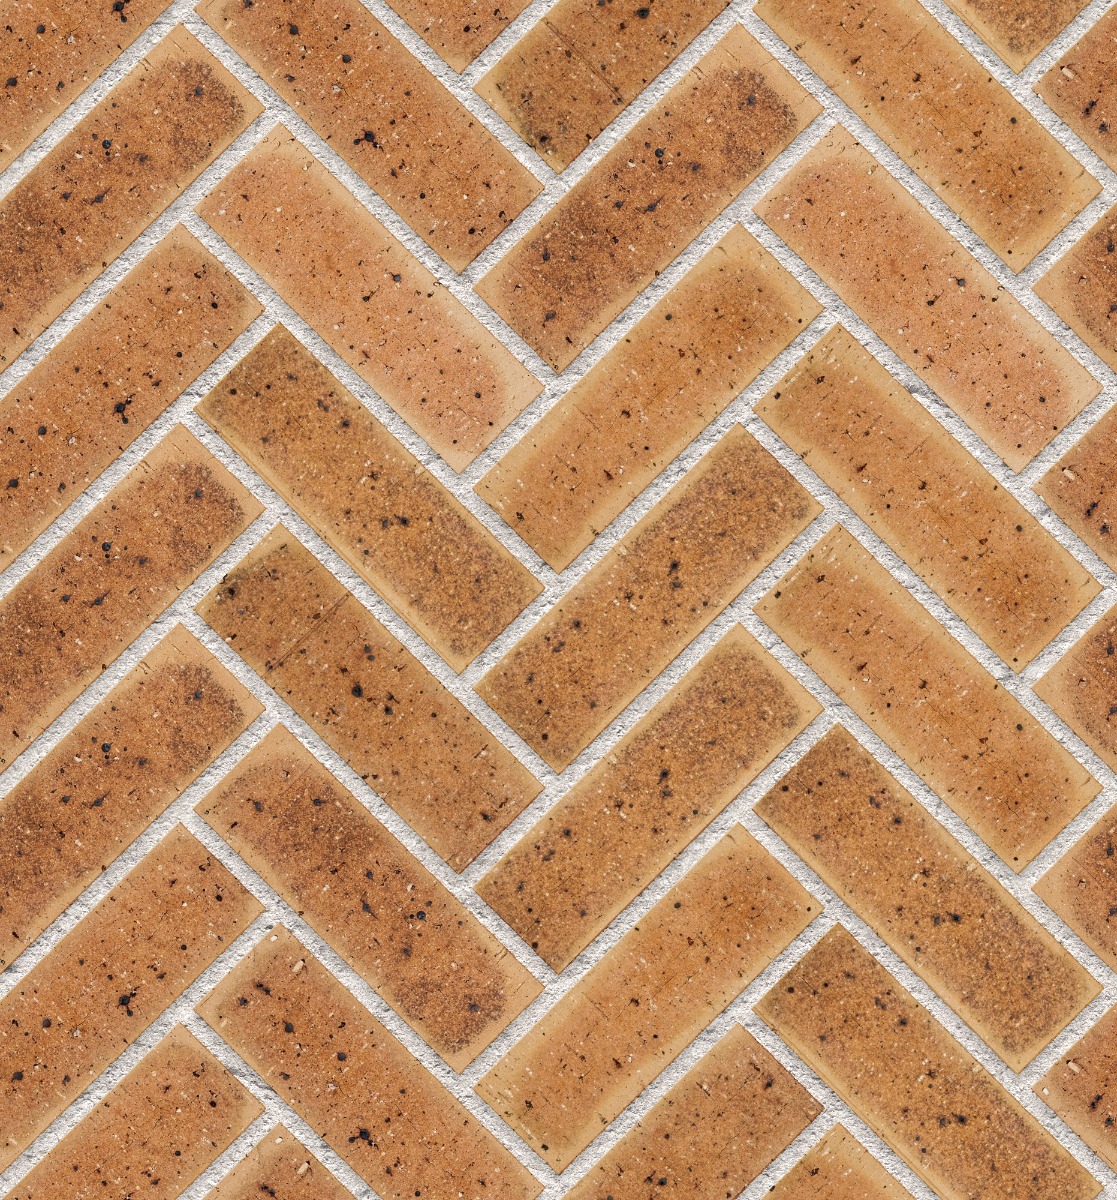 A seamless brick texture with autumn wheat travertine fbs units arranged in a Herringbone pattern